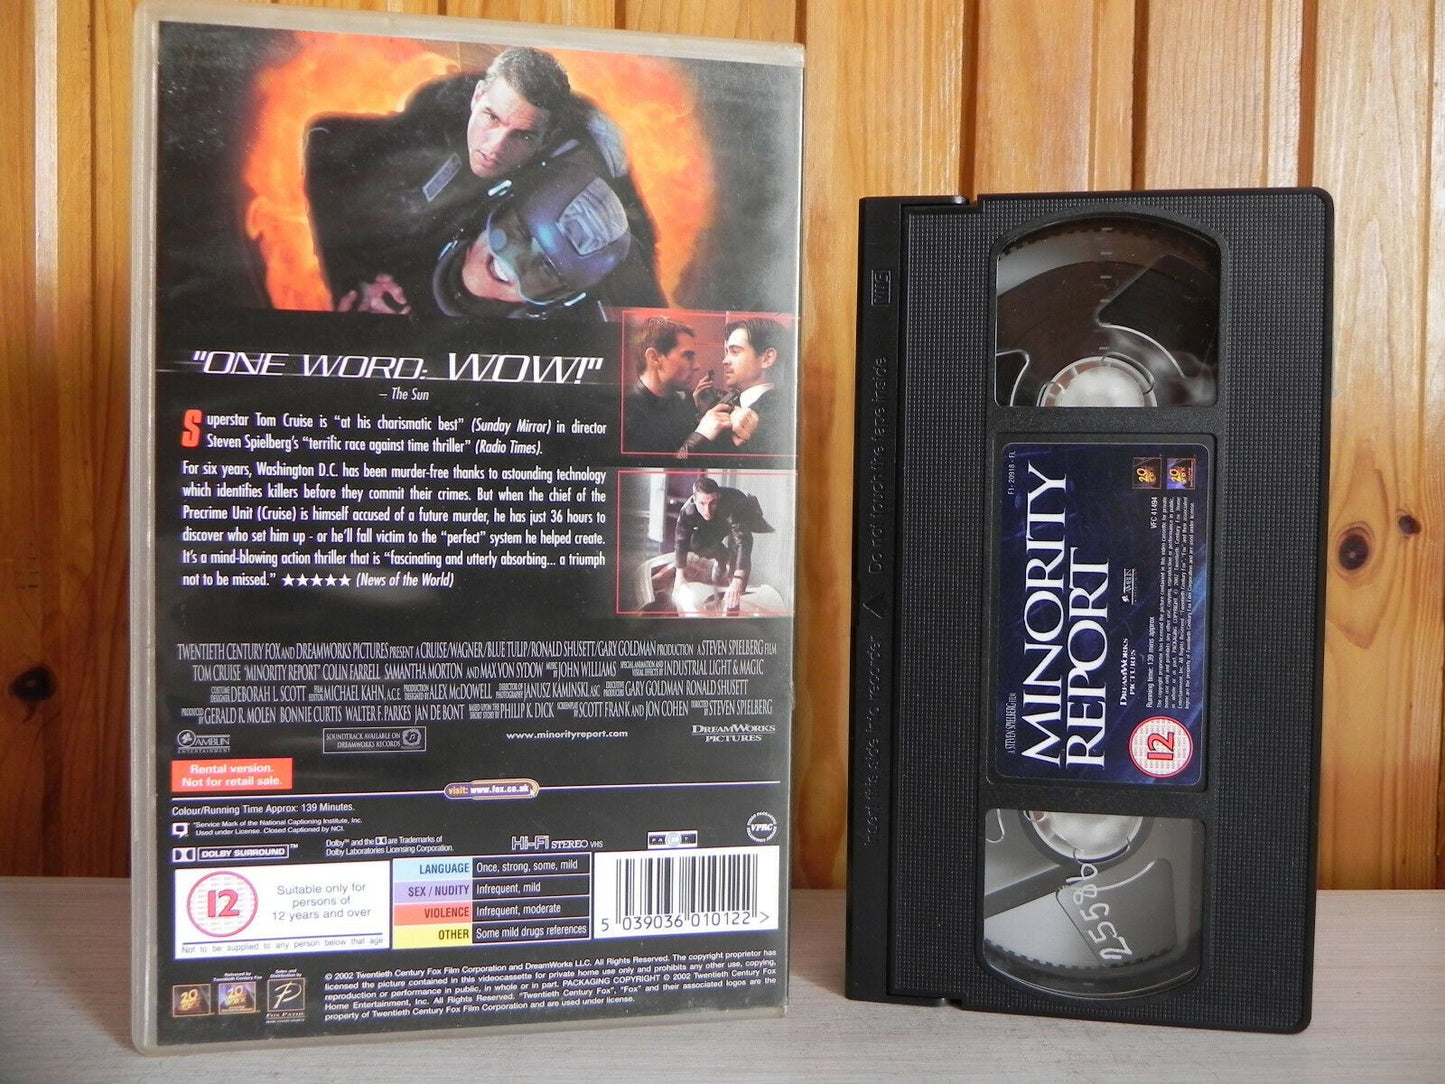 Minority Report - 20th Century - Thriller - Tom Cruise - Large Box - Pal VHS-